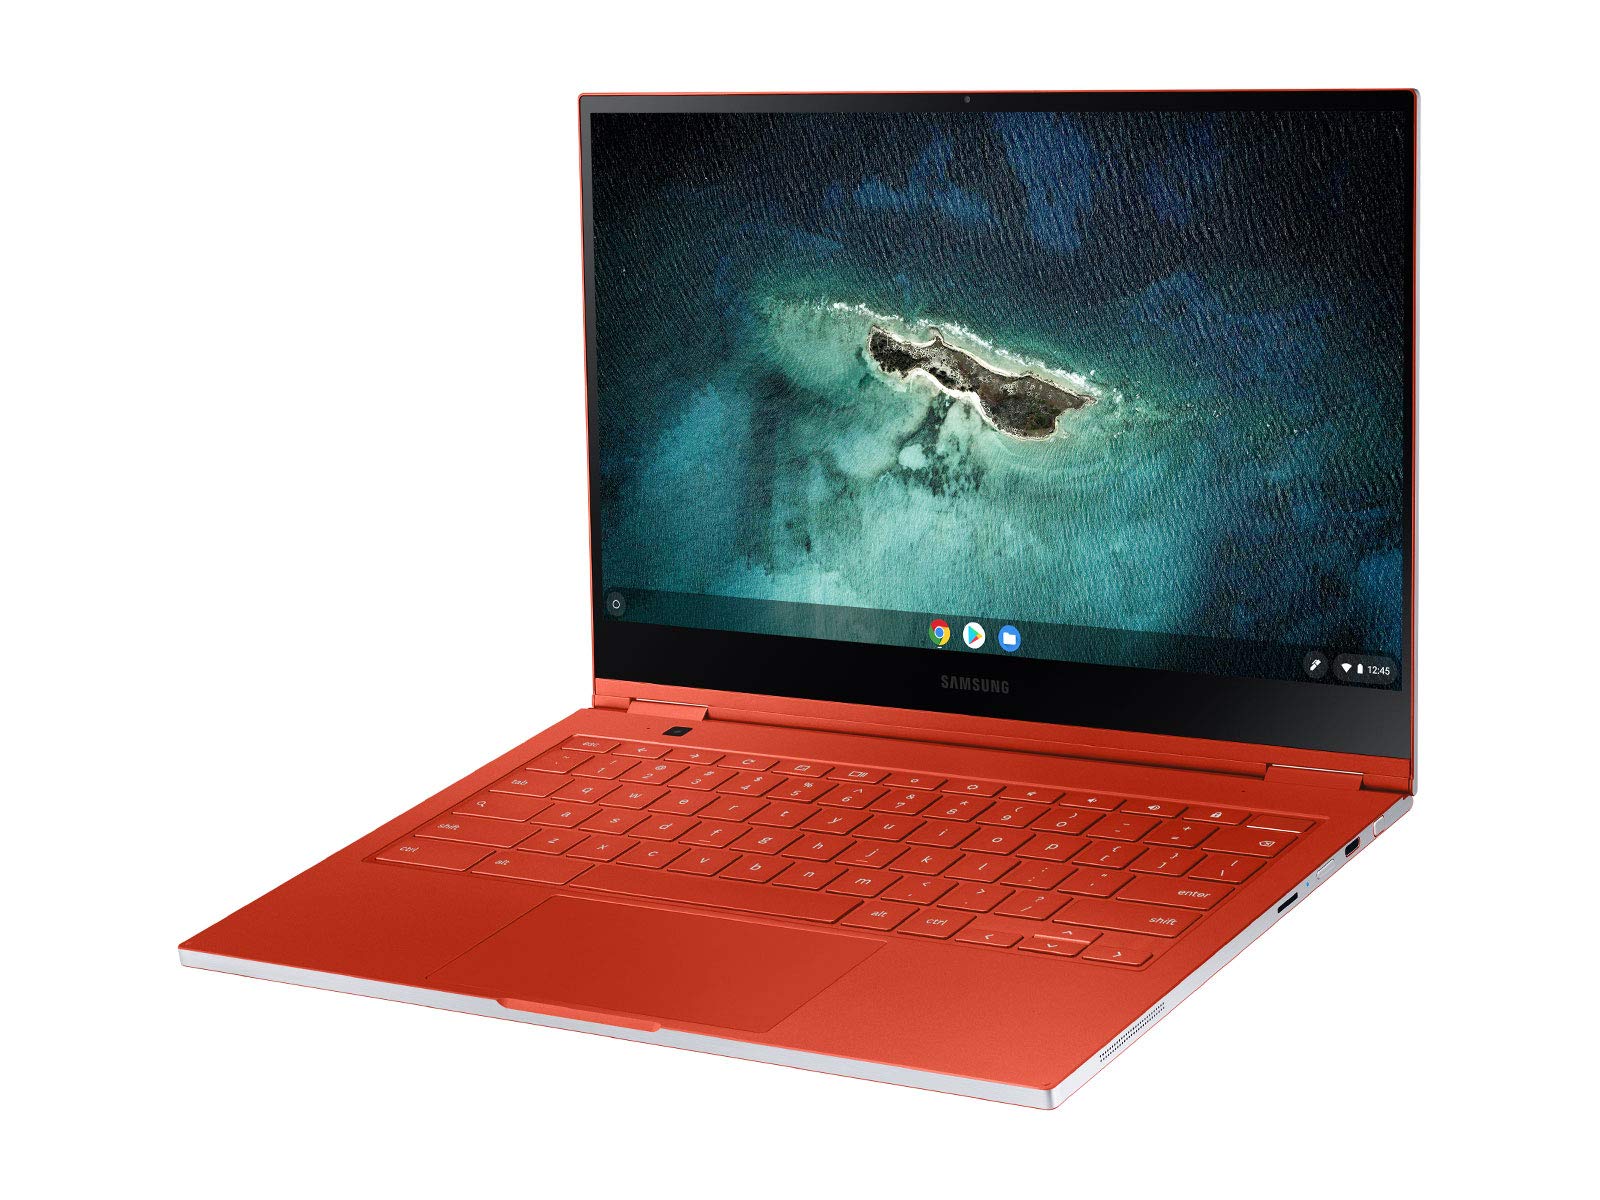 Samsung Galaxy Chromebook красного цвета на белом фоне